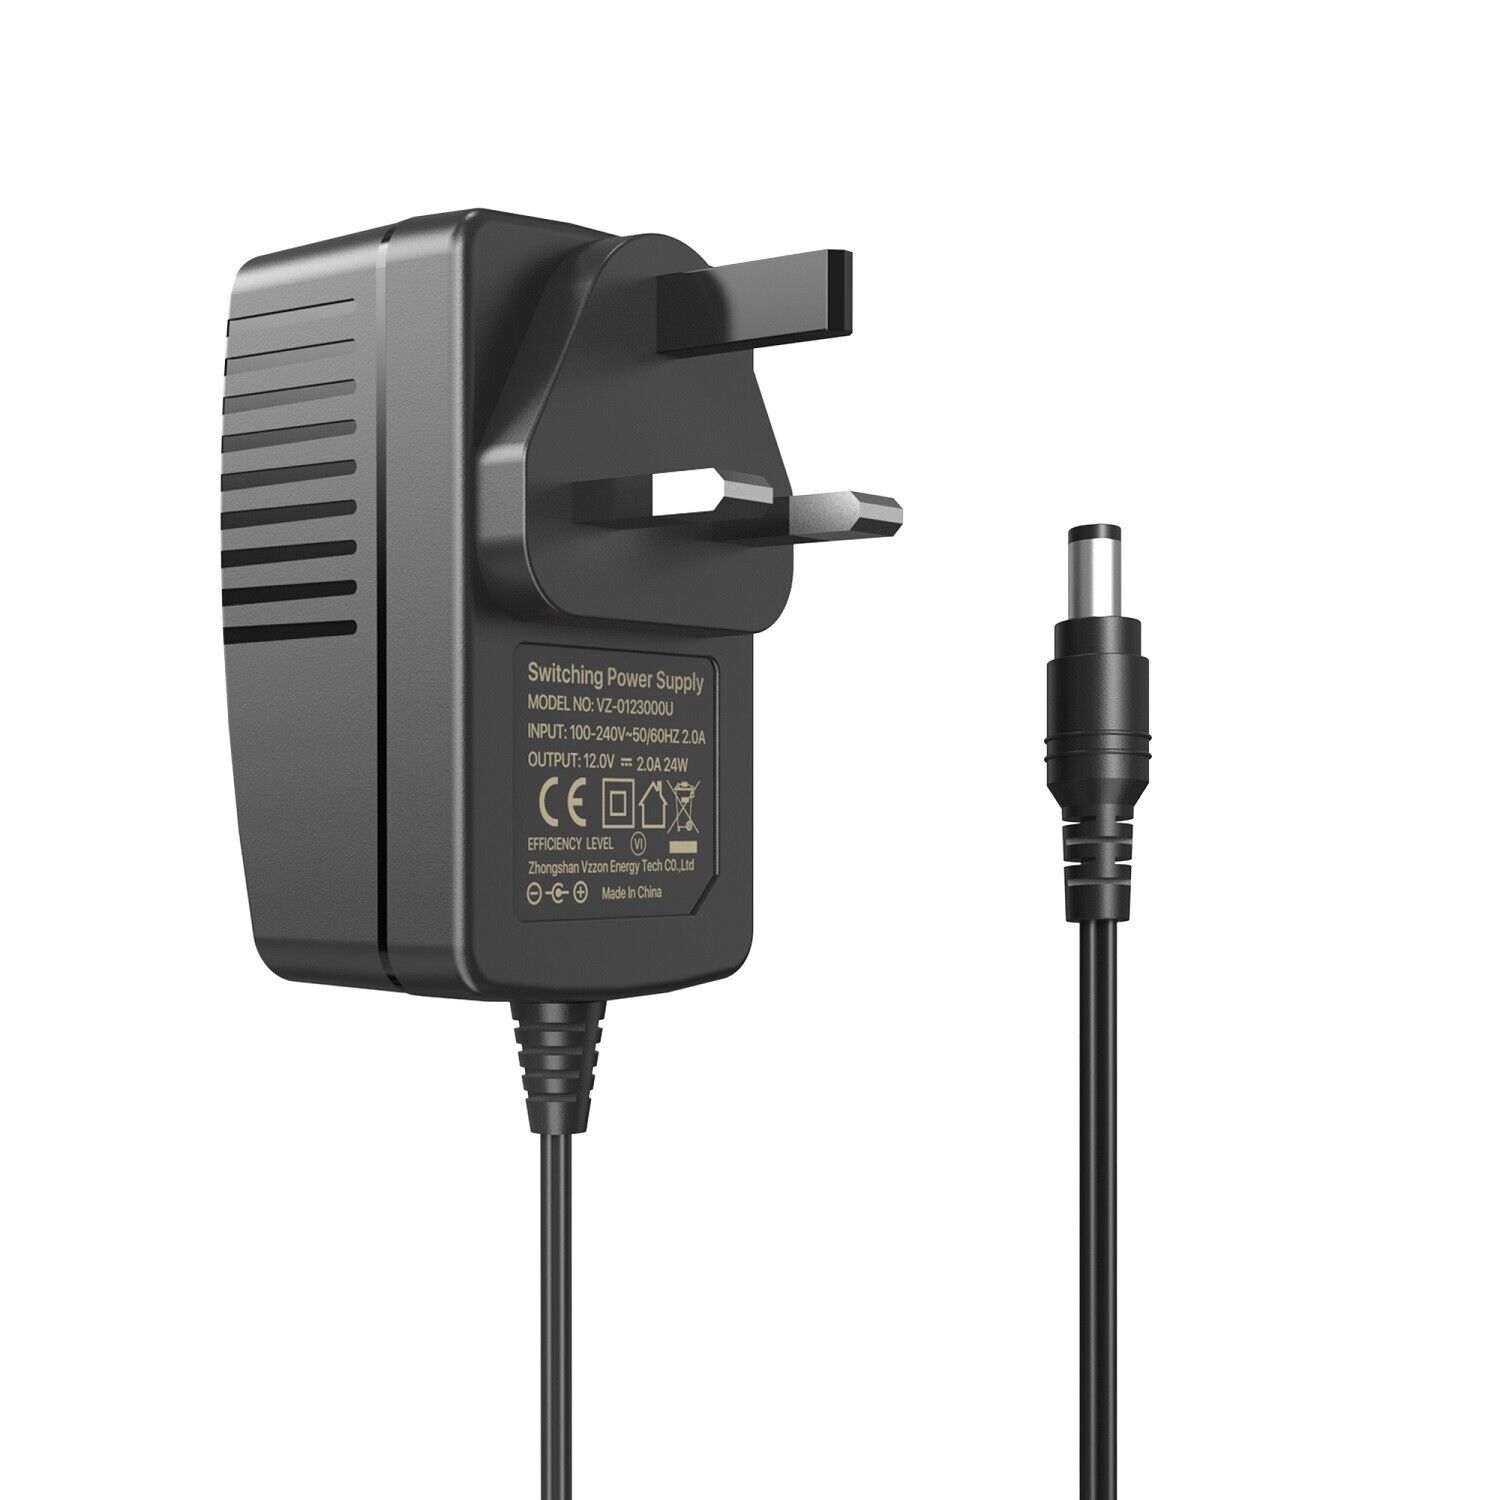 ZOSI 12V Power Supply 2A AC DC Adapter 3 Pin UK Plug For CCTV Camera IPC Charger £10 post thumbnail image